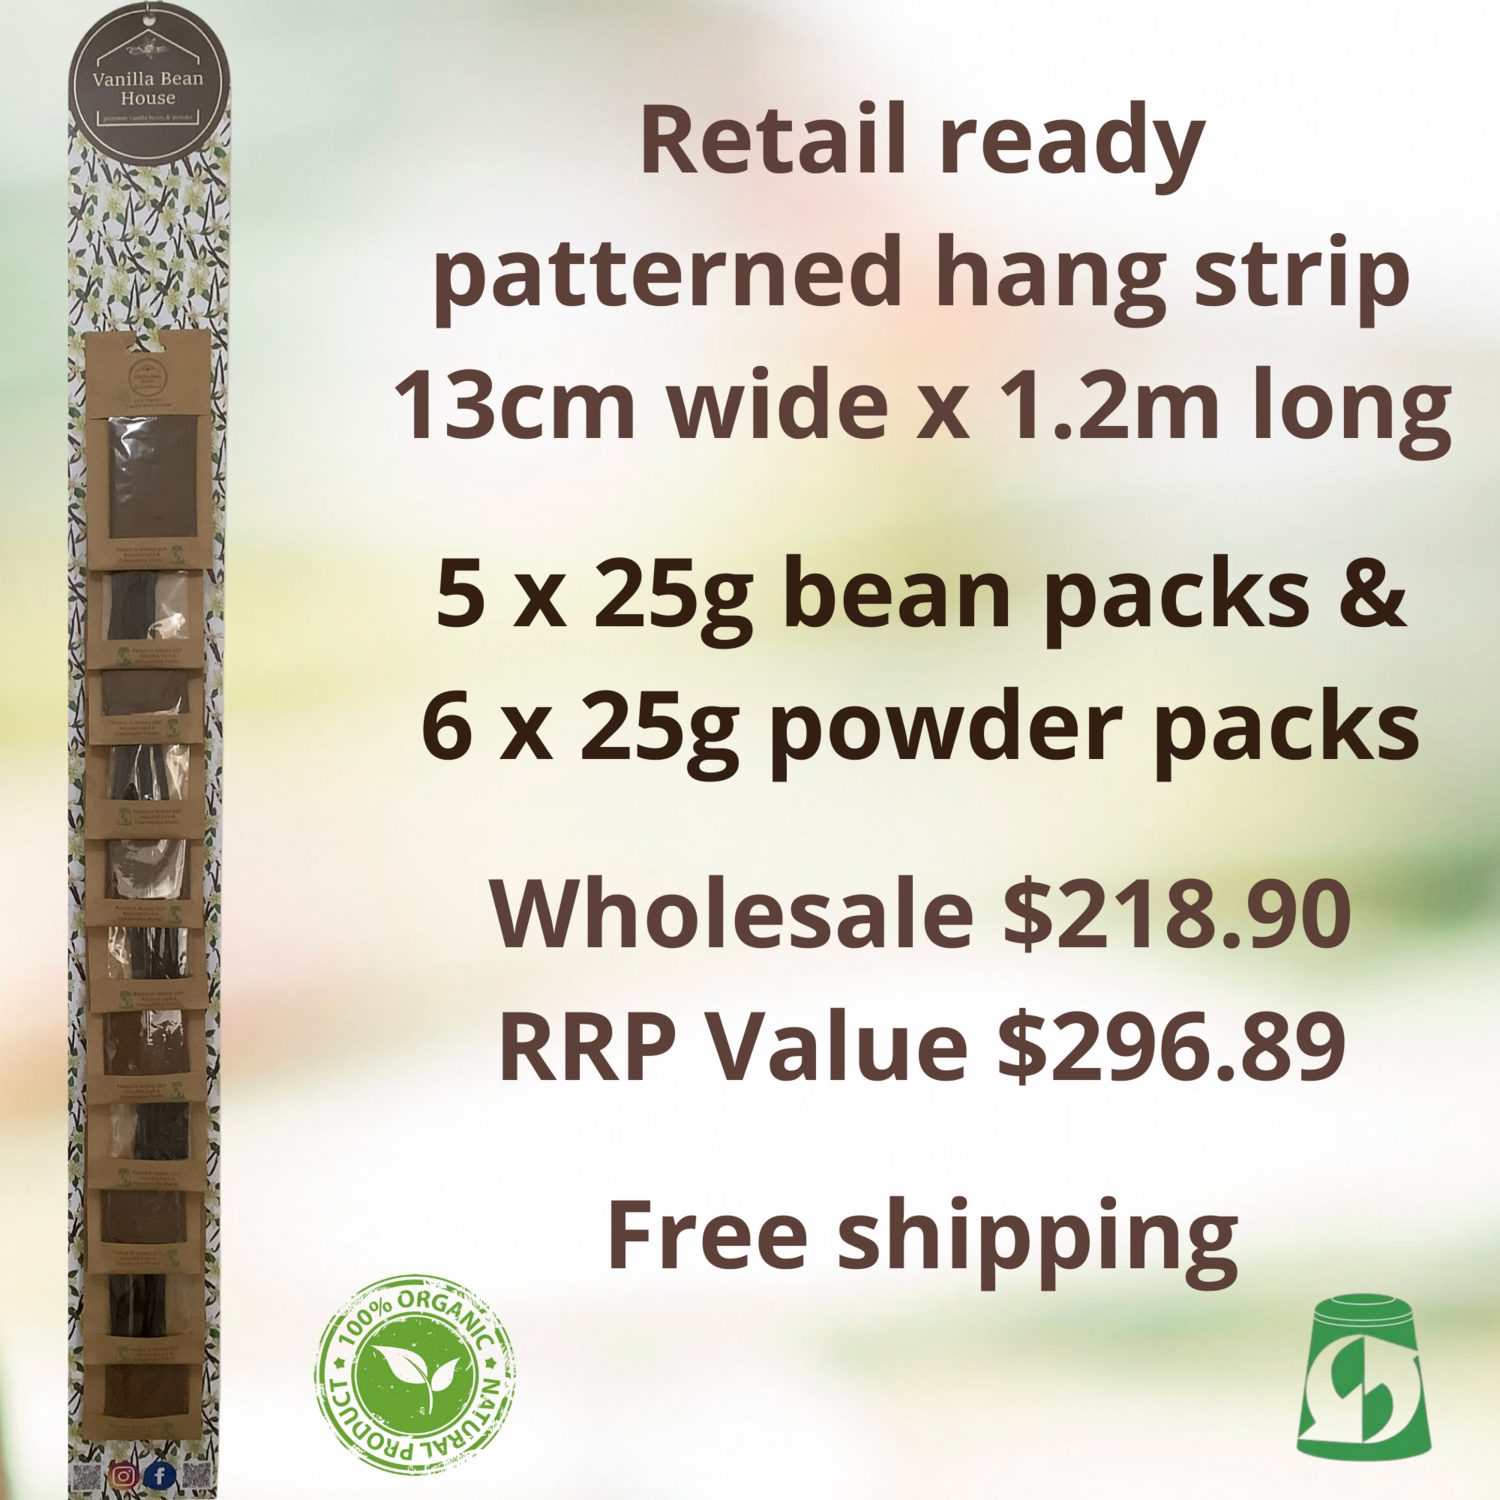 Vanilla Beans & Powder - Retail Ready Hang Strip - 11 packs 5 x 25g bean packs & 6 x 25g powder packs - organic, eco-friendly card and compostable packaging